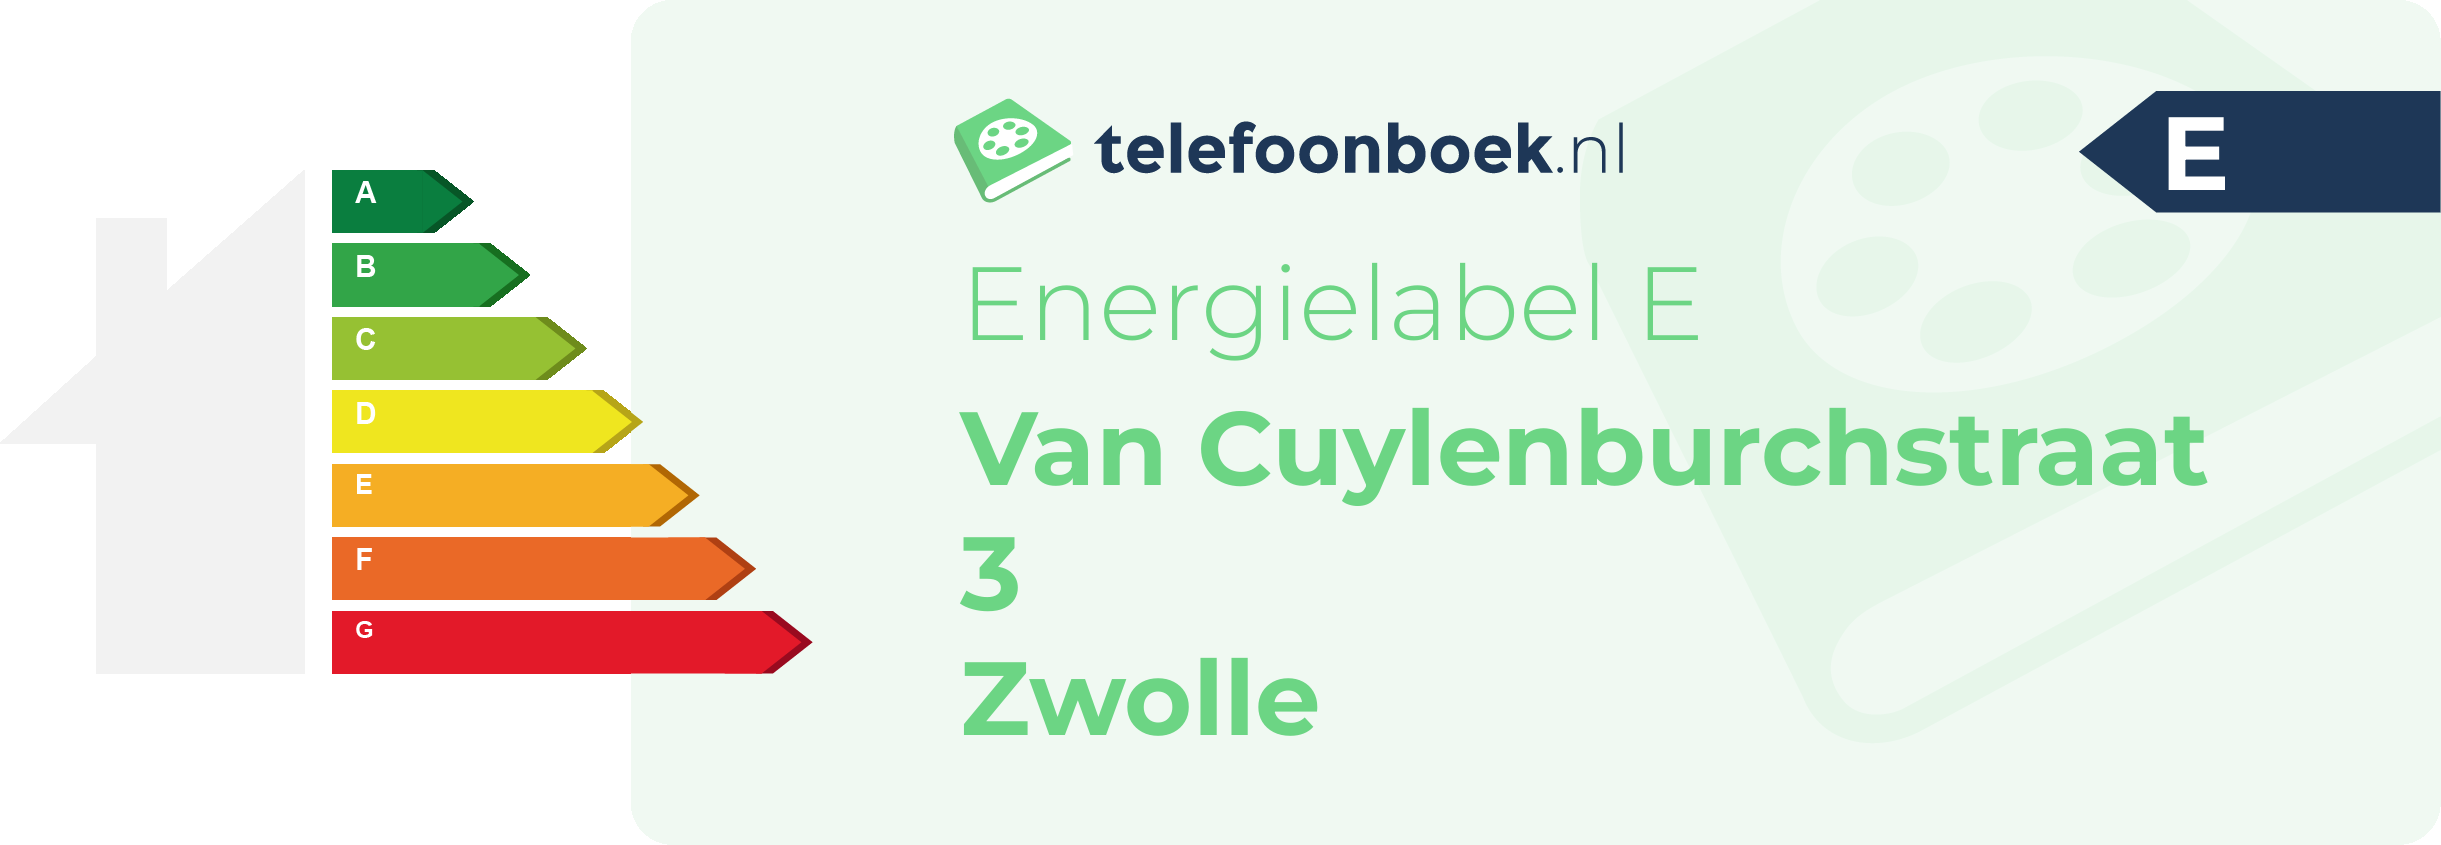 Energielabel Van Cuylenburchstraat 3 Zwolle